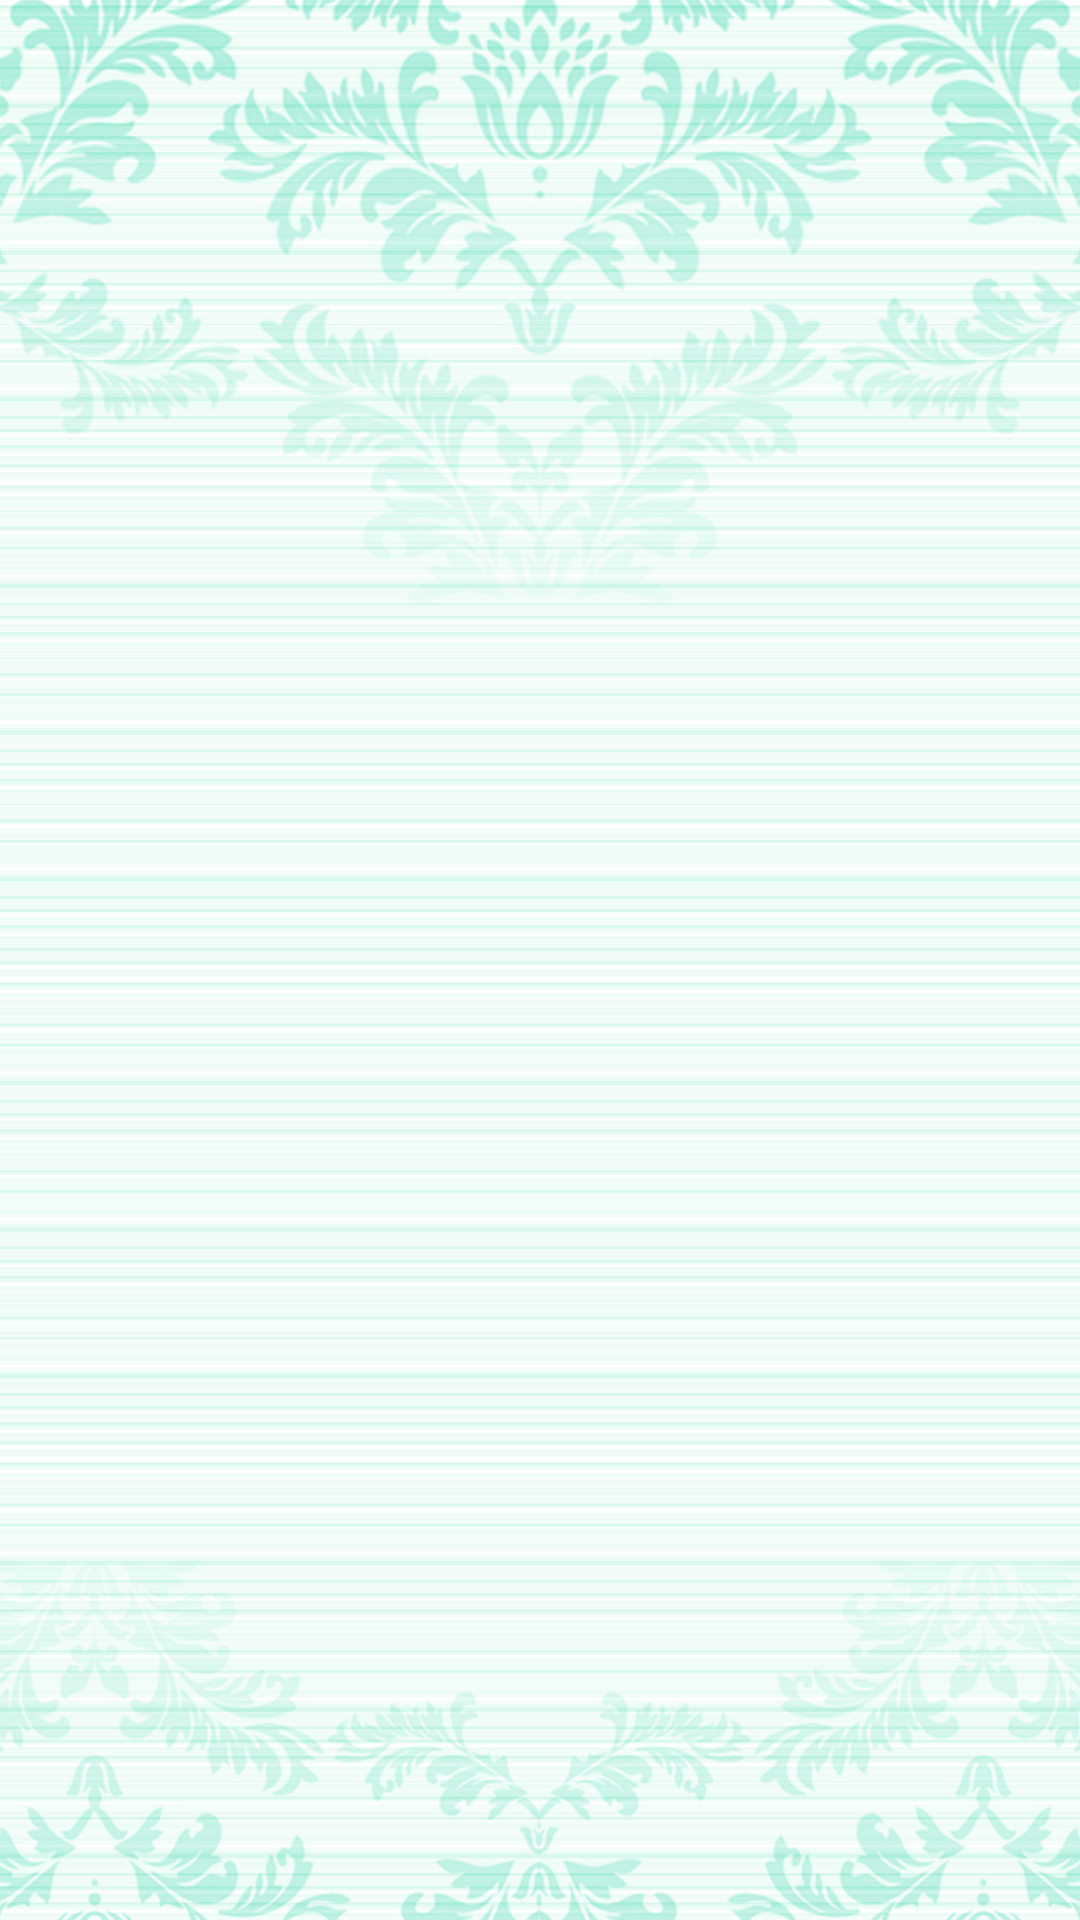 Mint Green iPhone Wallpaper (60+ images)